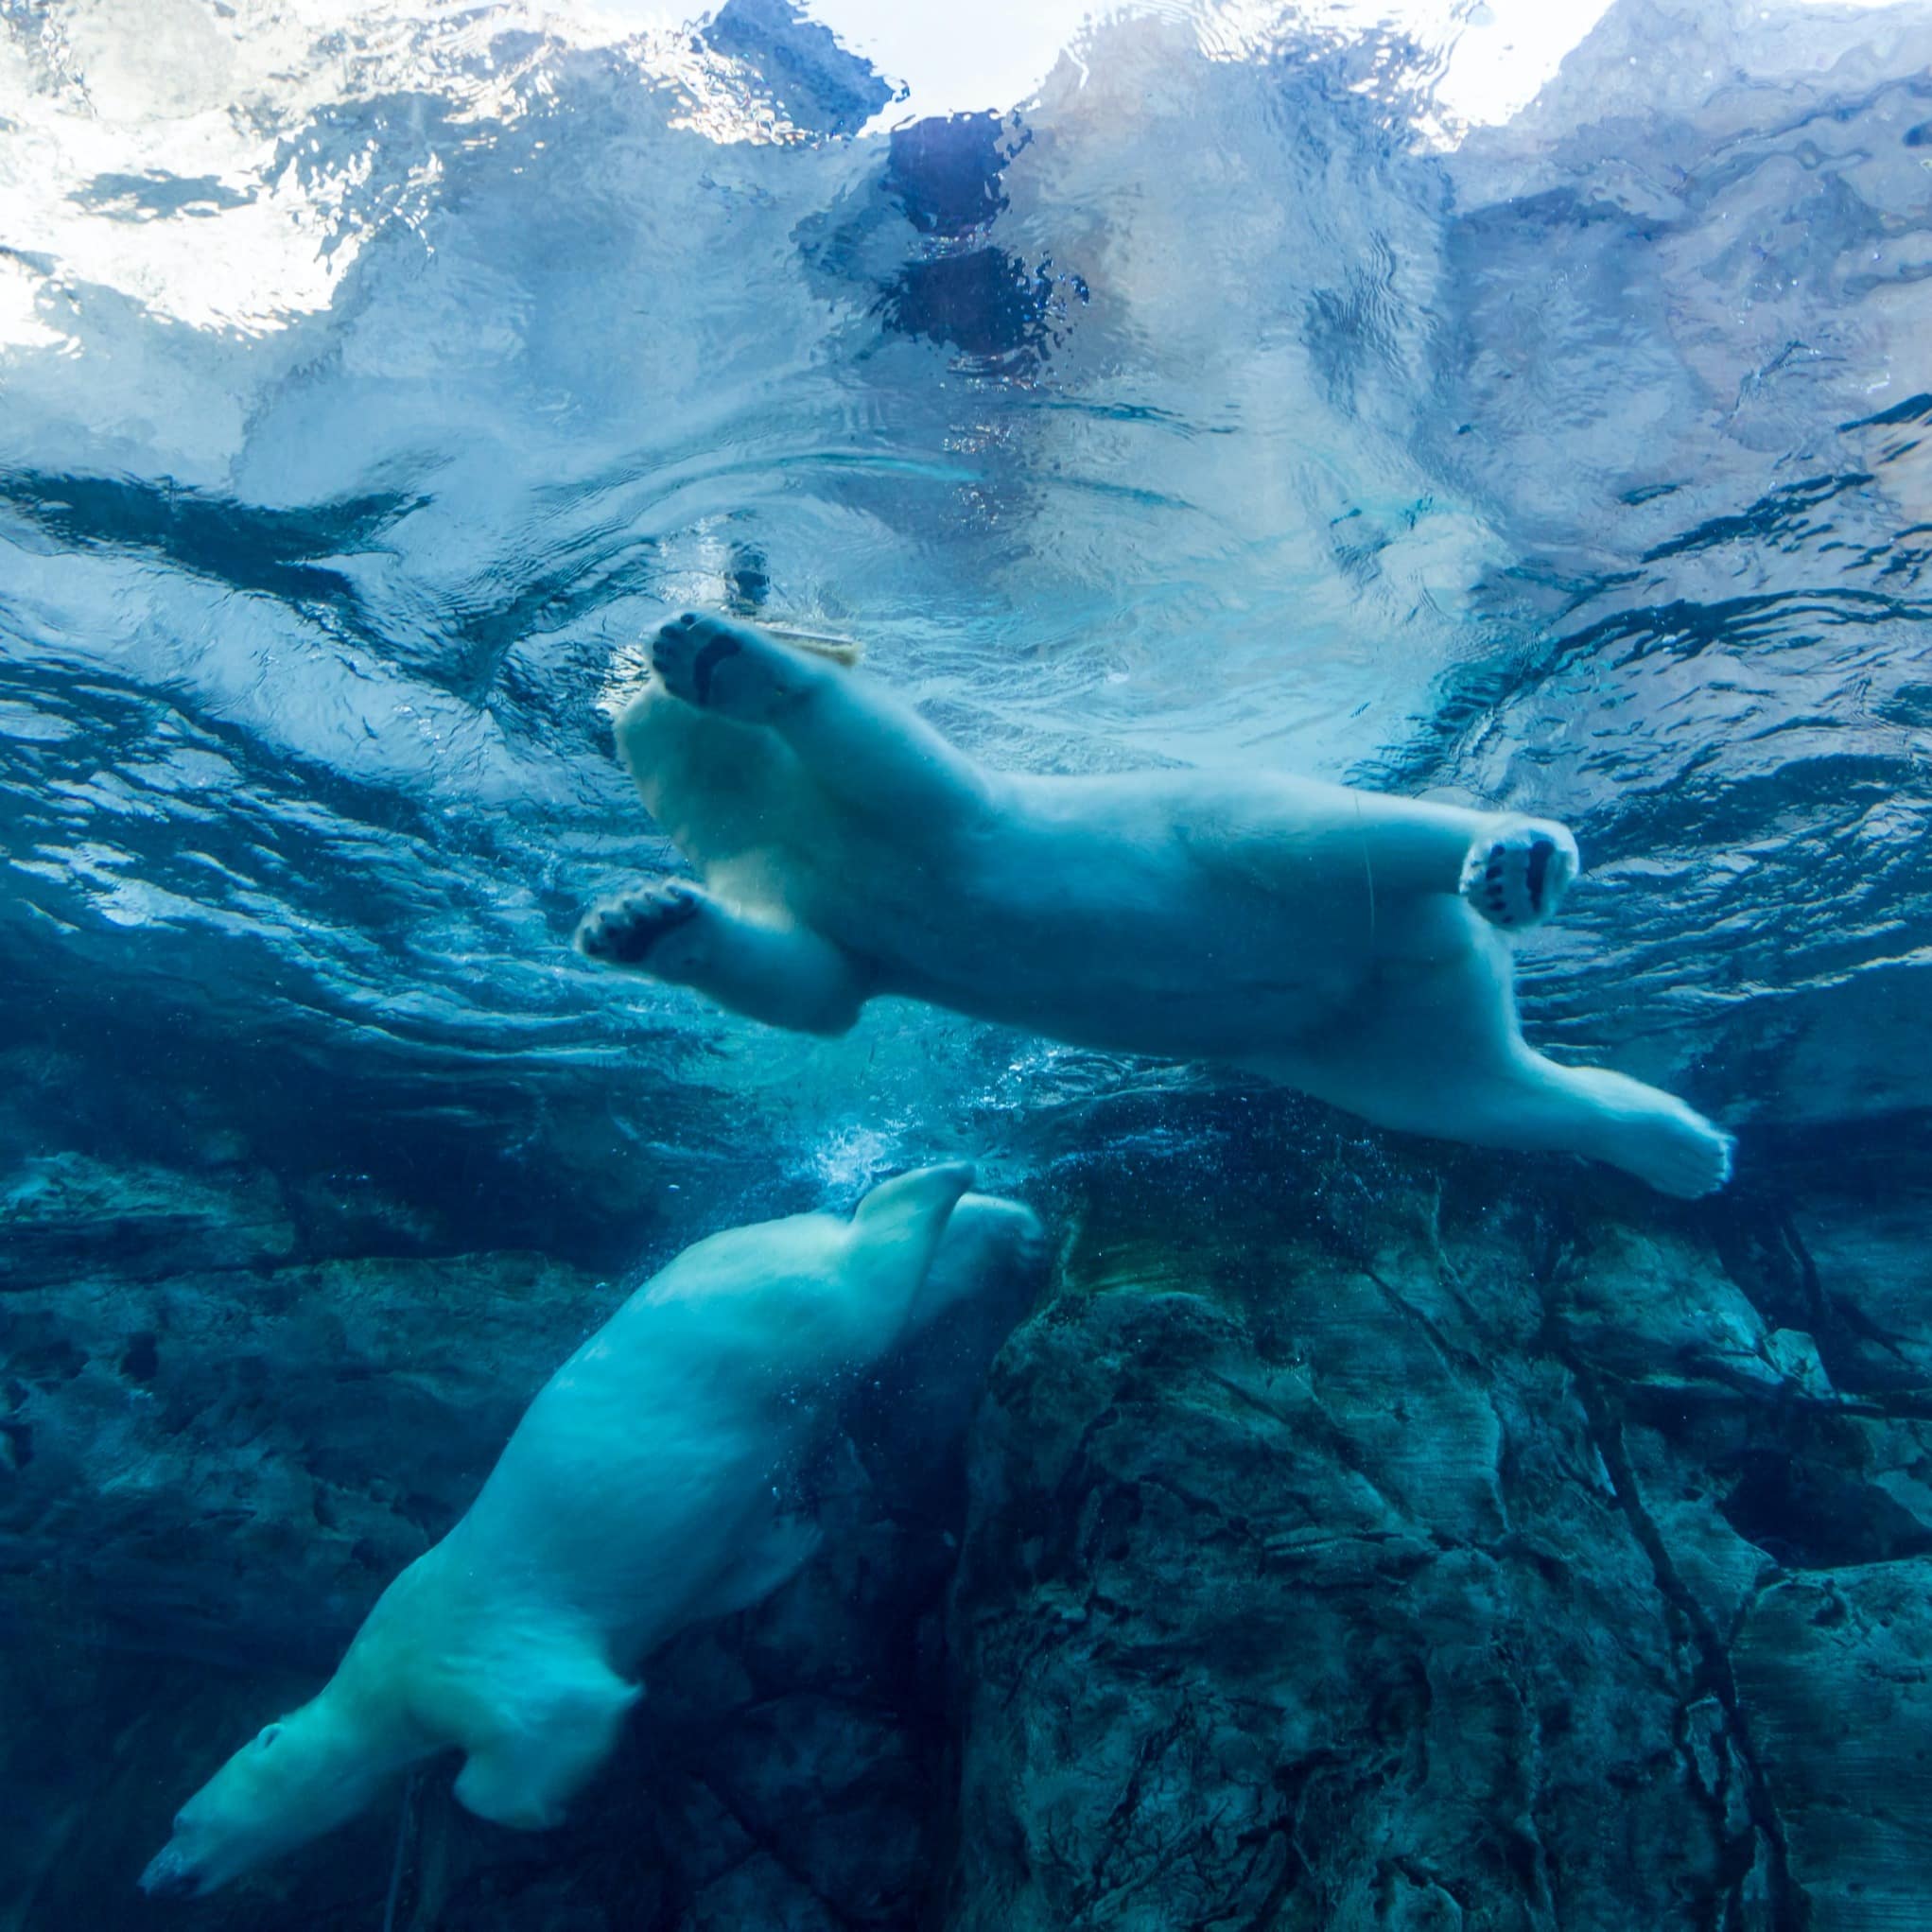 Underwater view of two polar bears swimming at Assiniboine Park Zoo in Winnipeg, Manitoba, CA